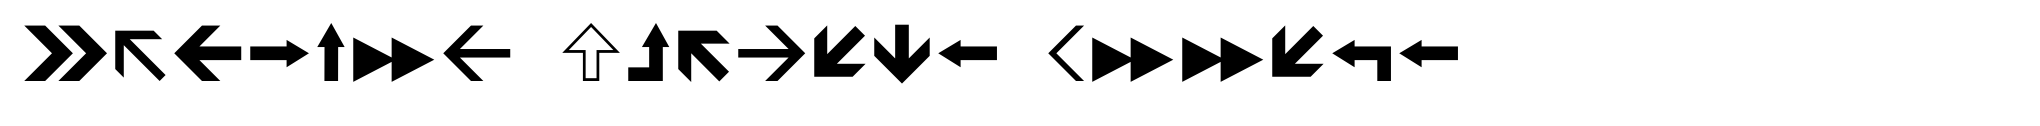 Leitura Symbols Arrows image